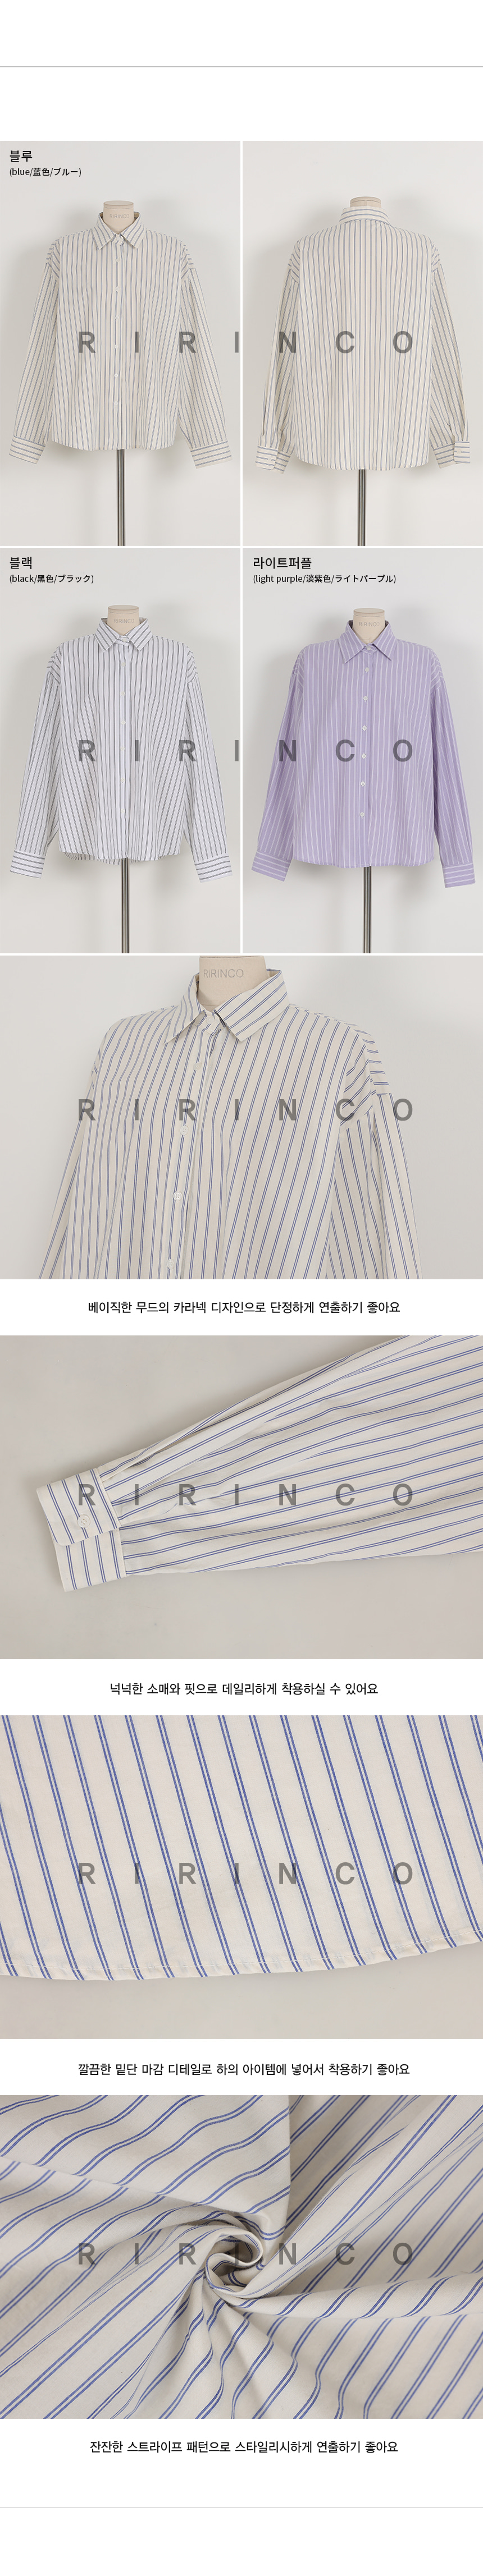 RIRINCO ストライプ柄カラーネックシャツ